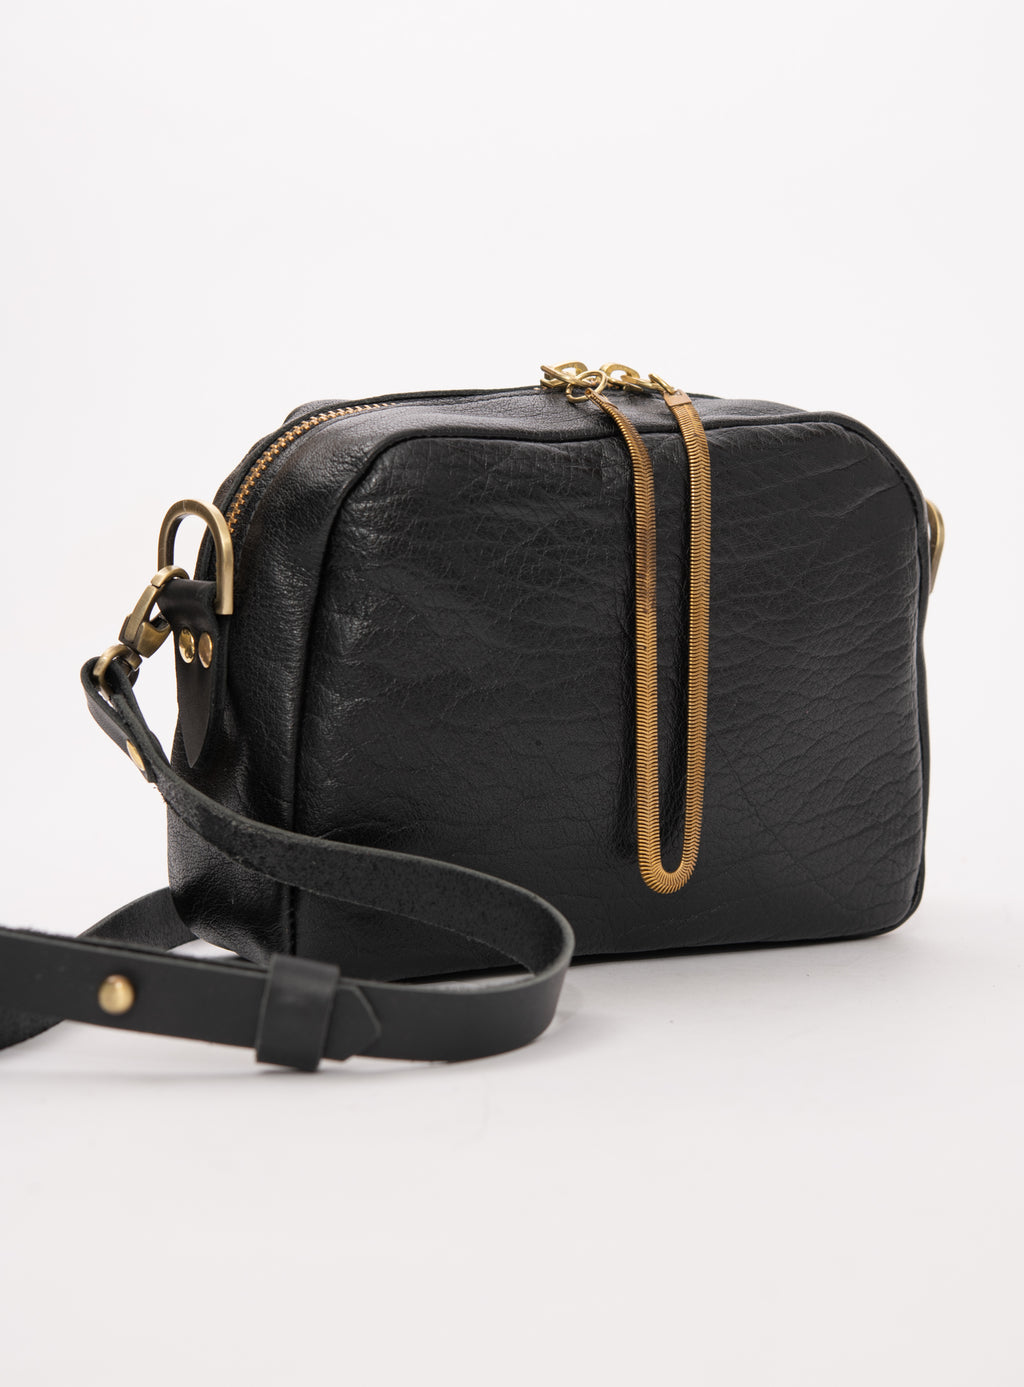 Veinage Cartier black leather crossbody bag, handmade in Montreal Canada